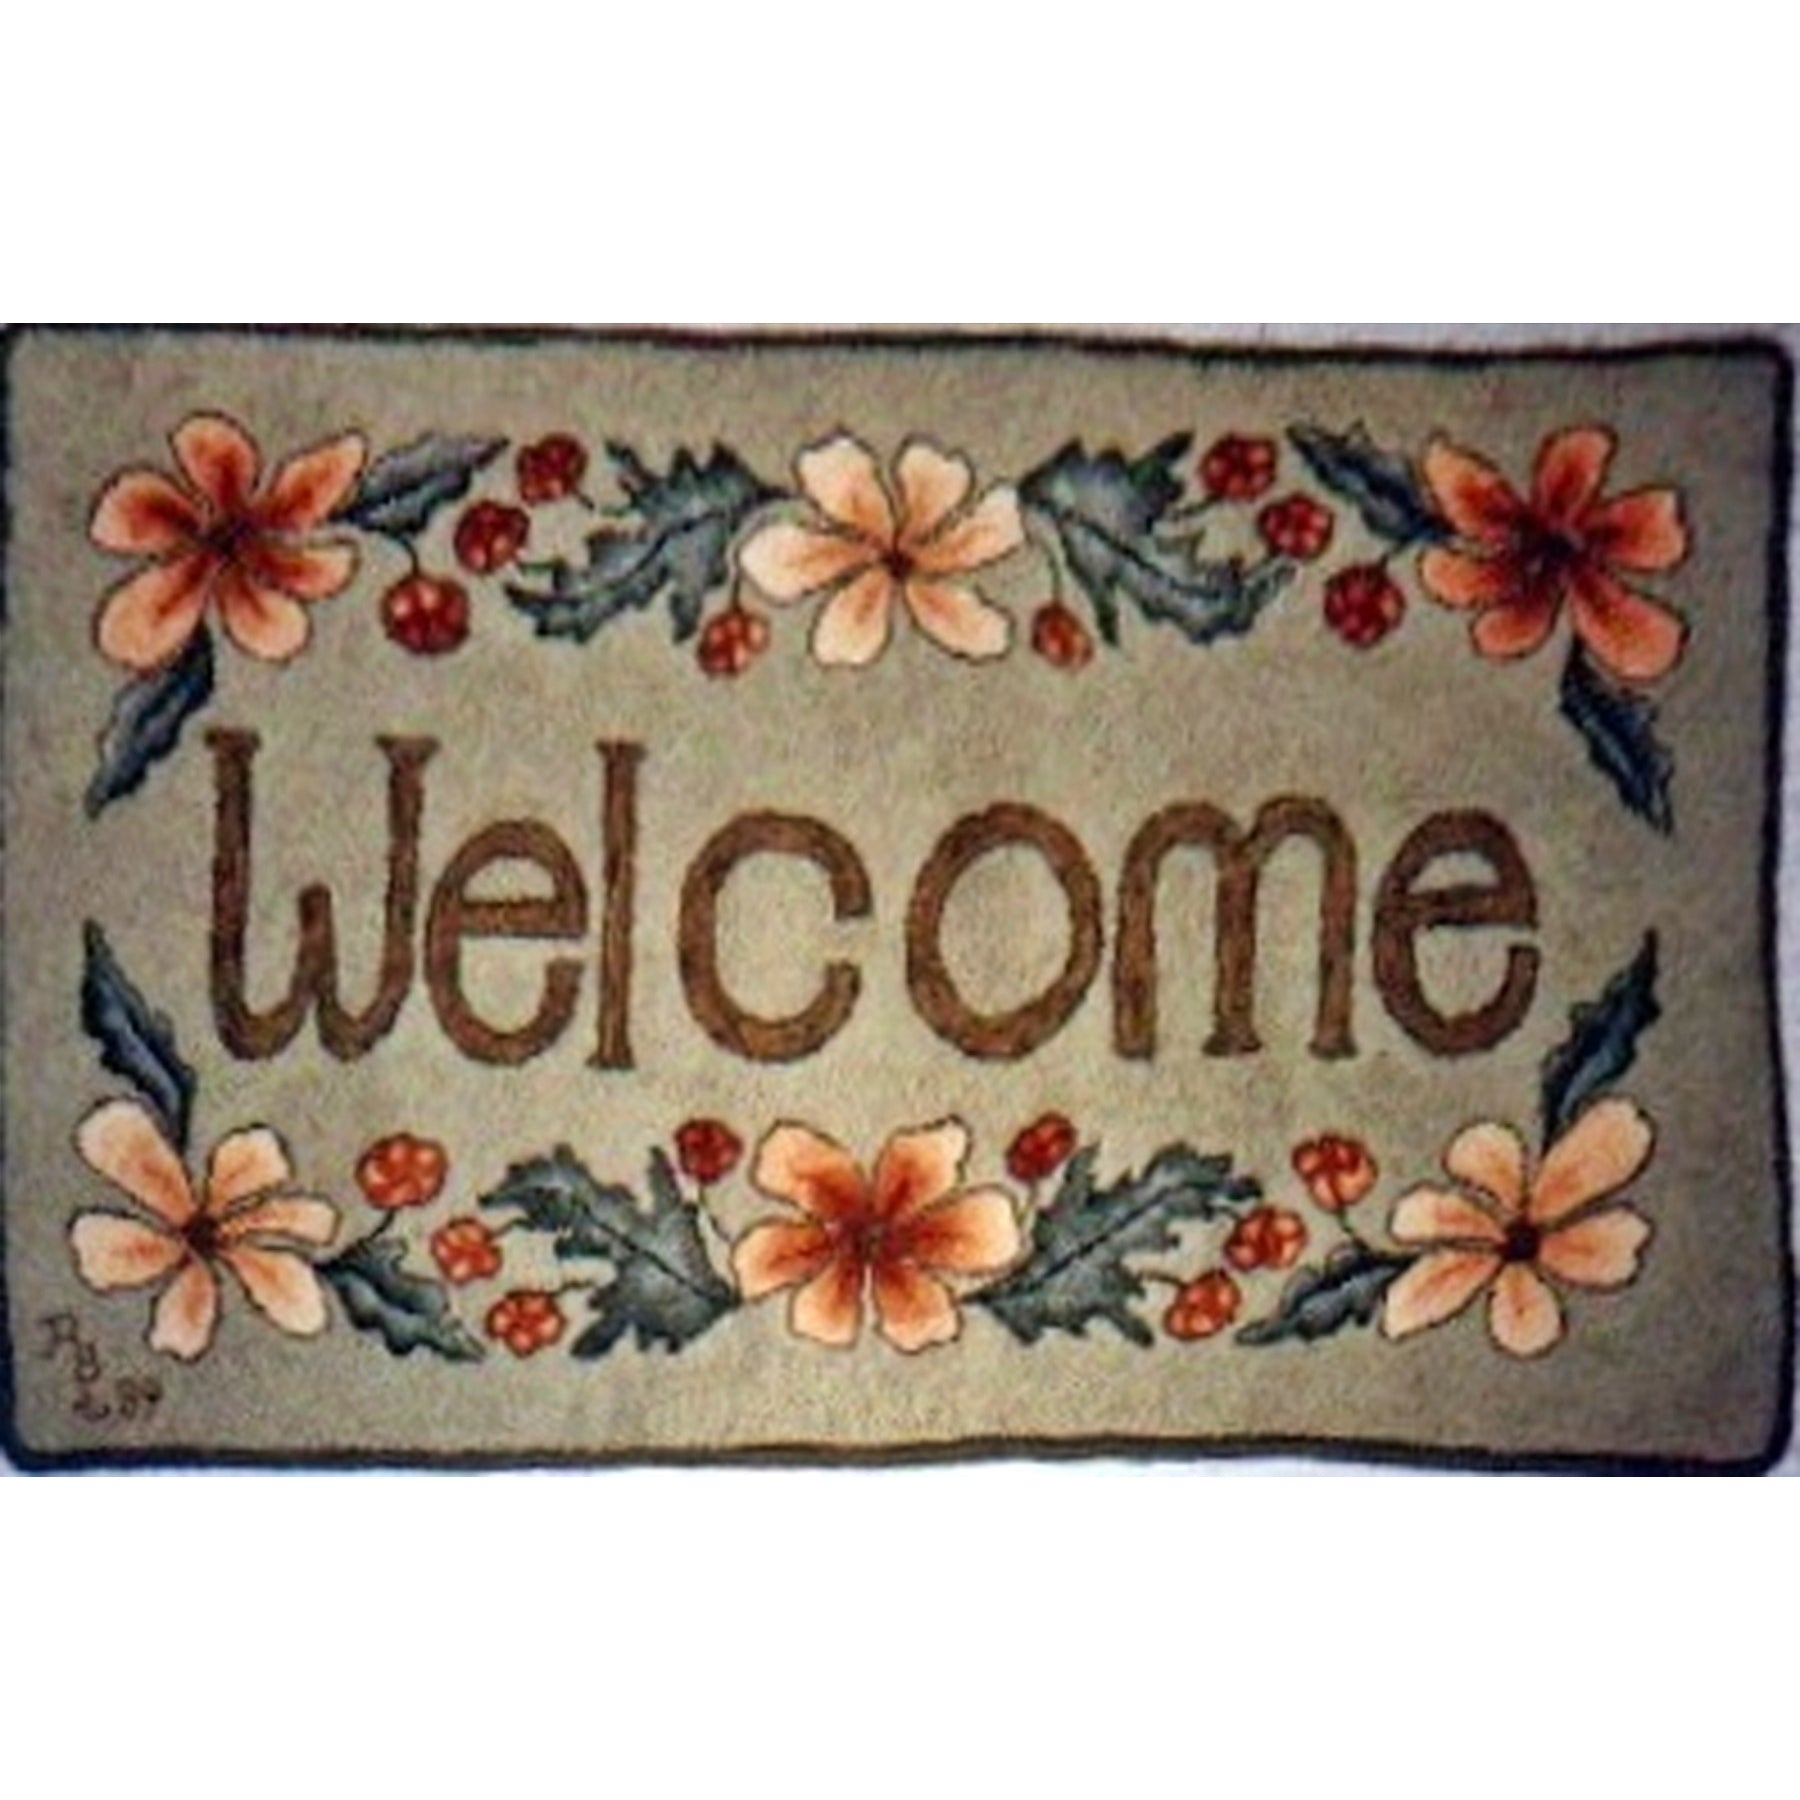 Welcome-Open Flower, rug hooked by Robin Haruna